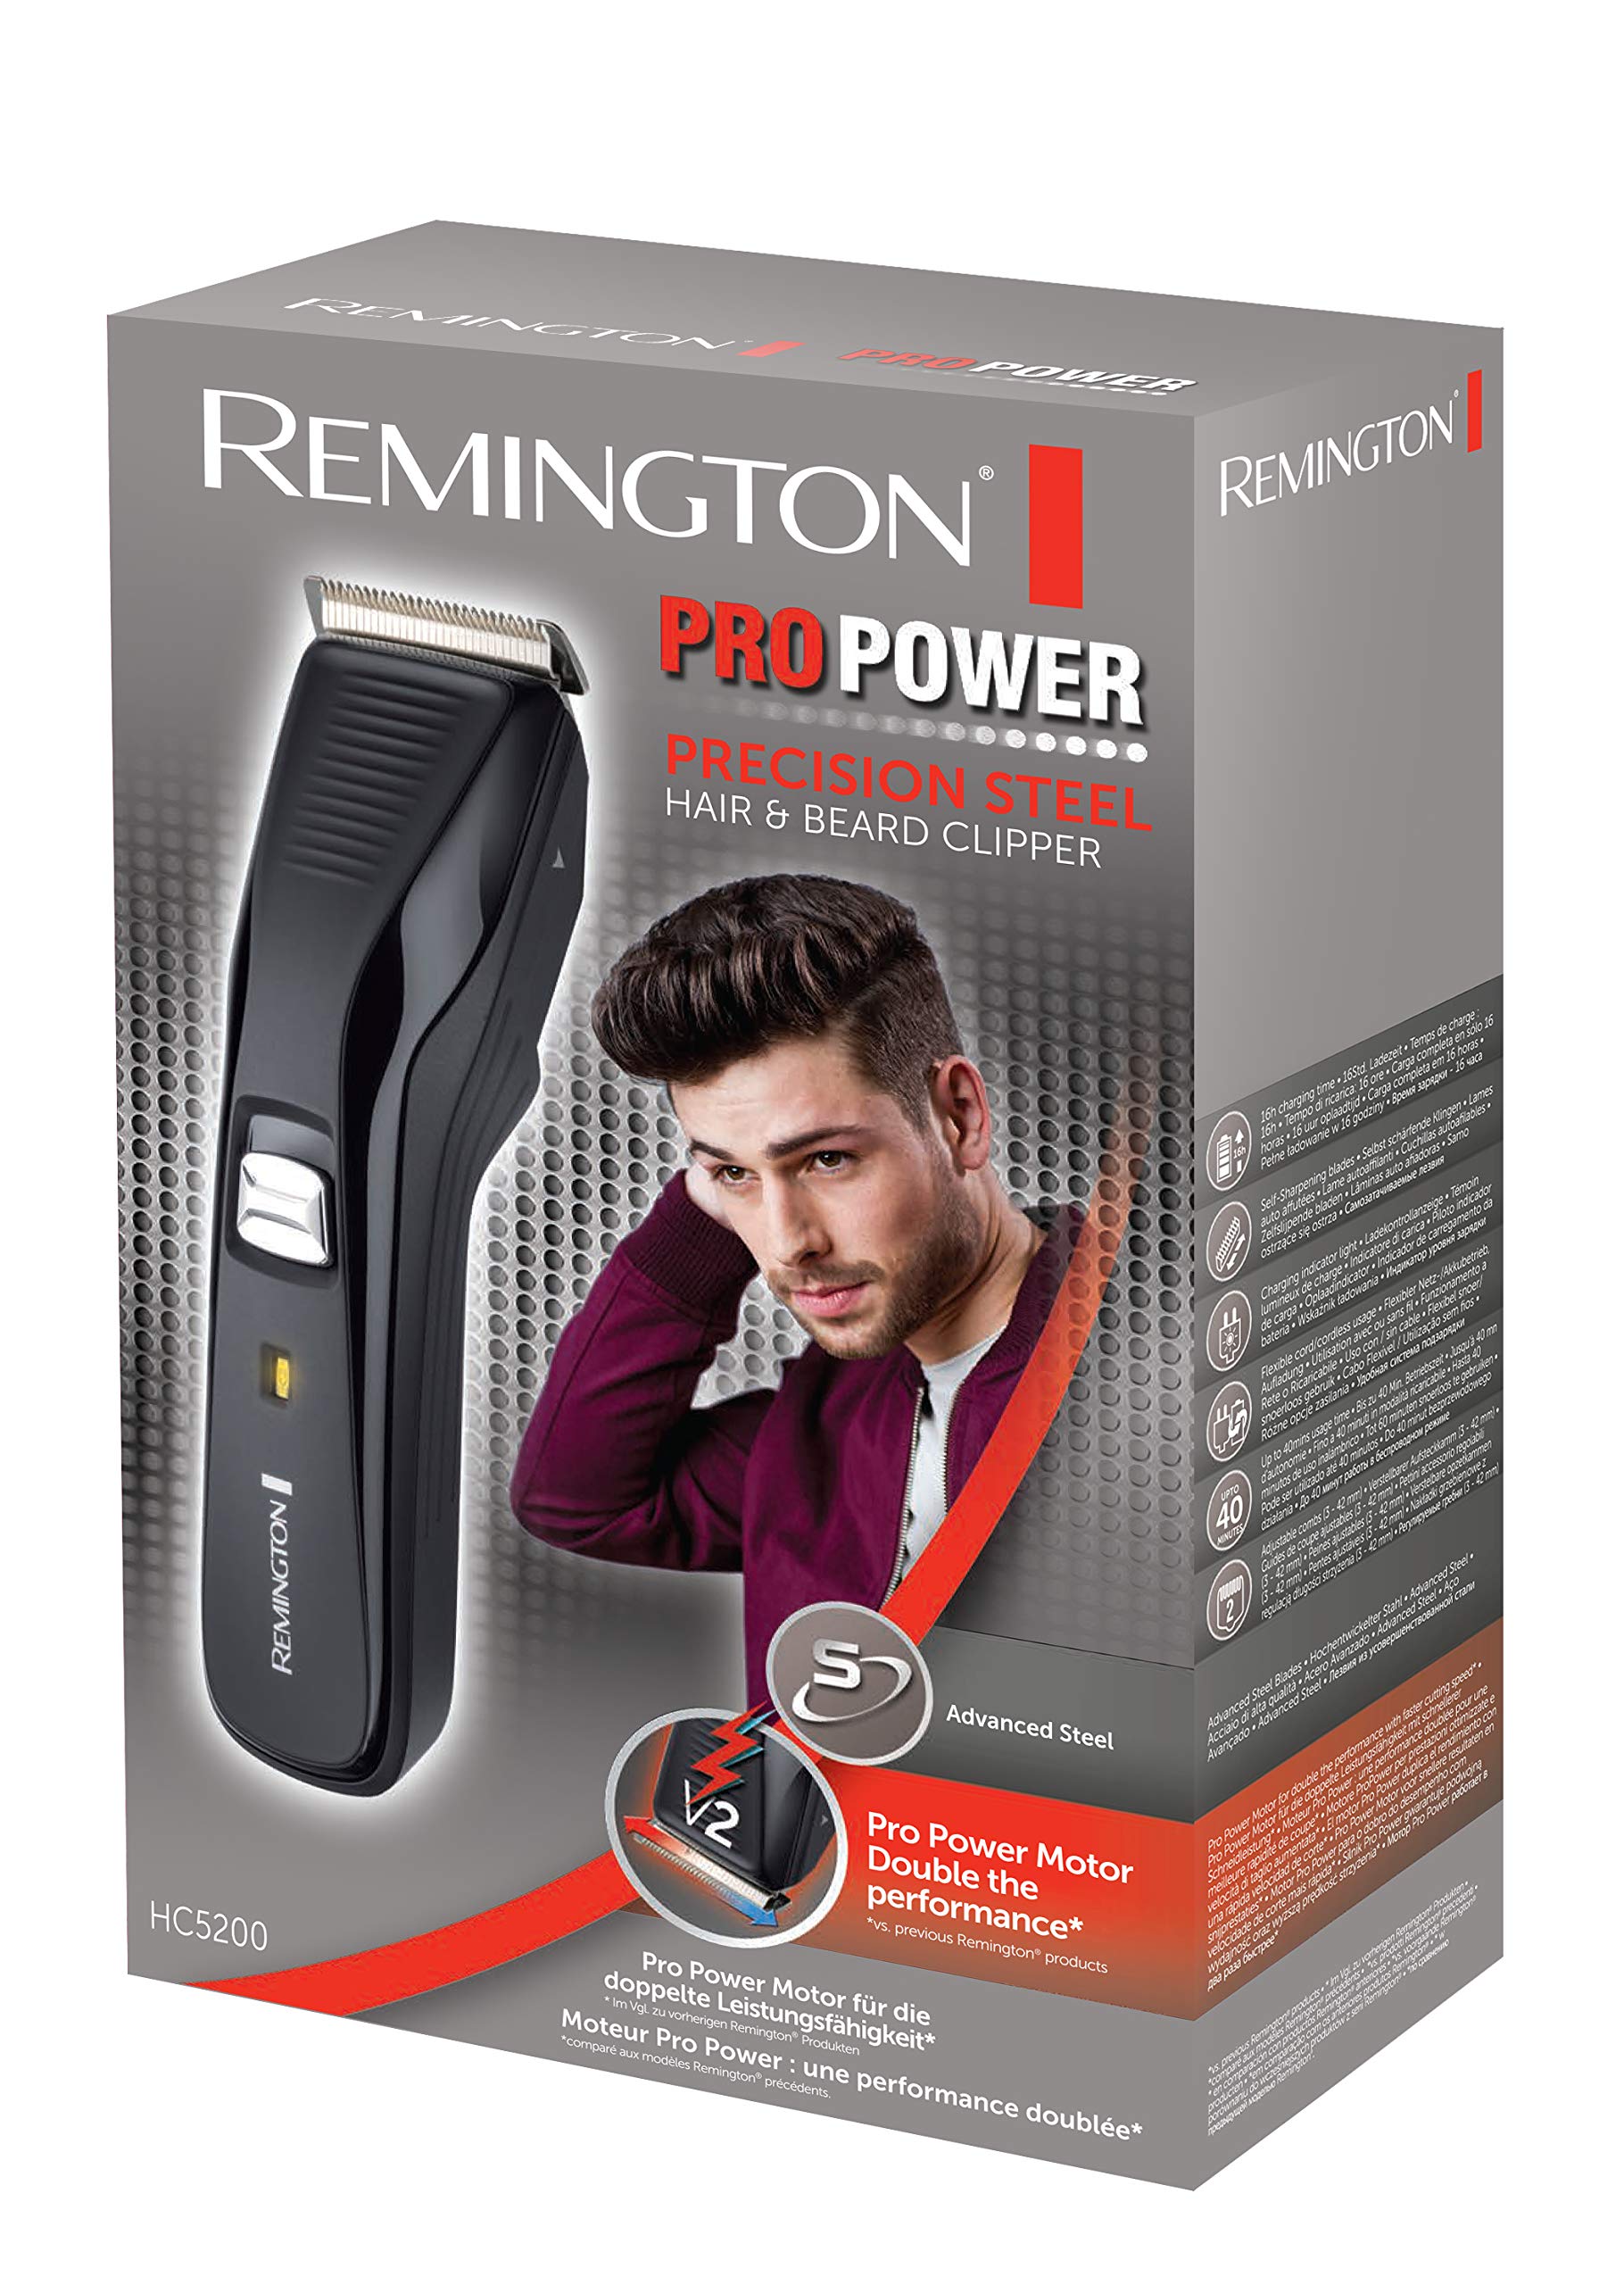 remington hc5200 pro power hair clipper